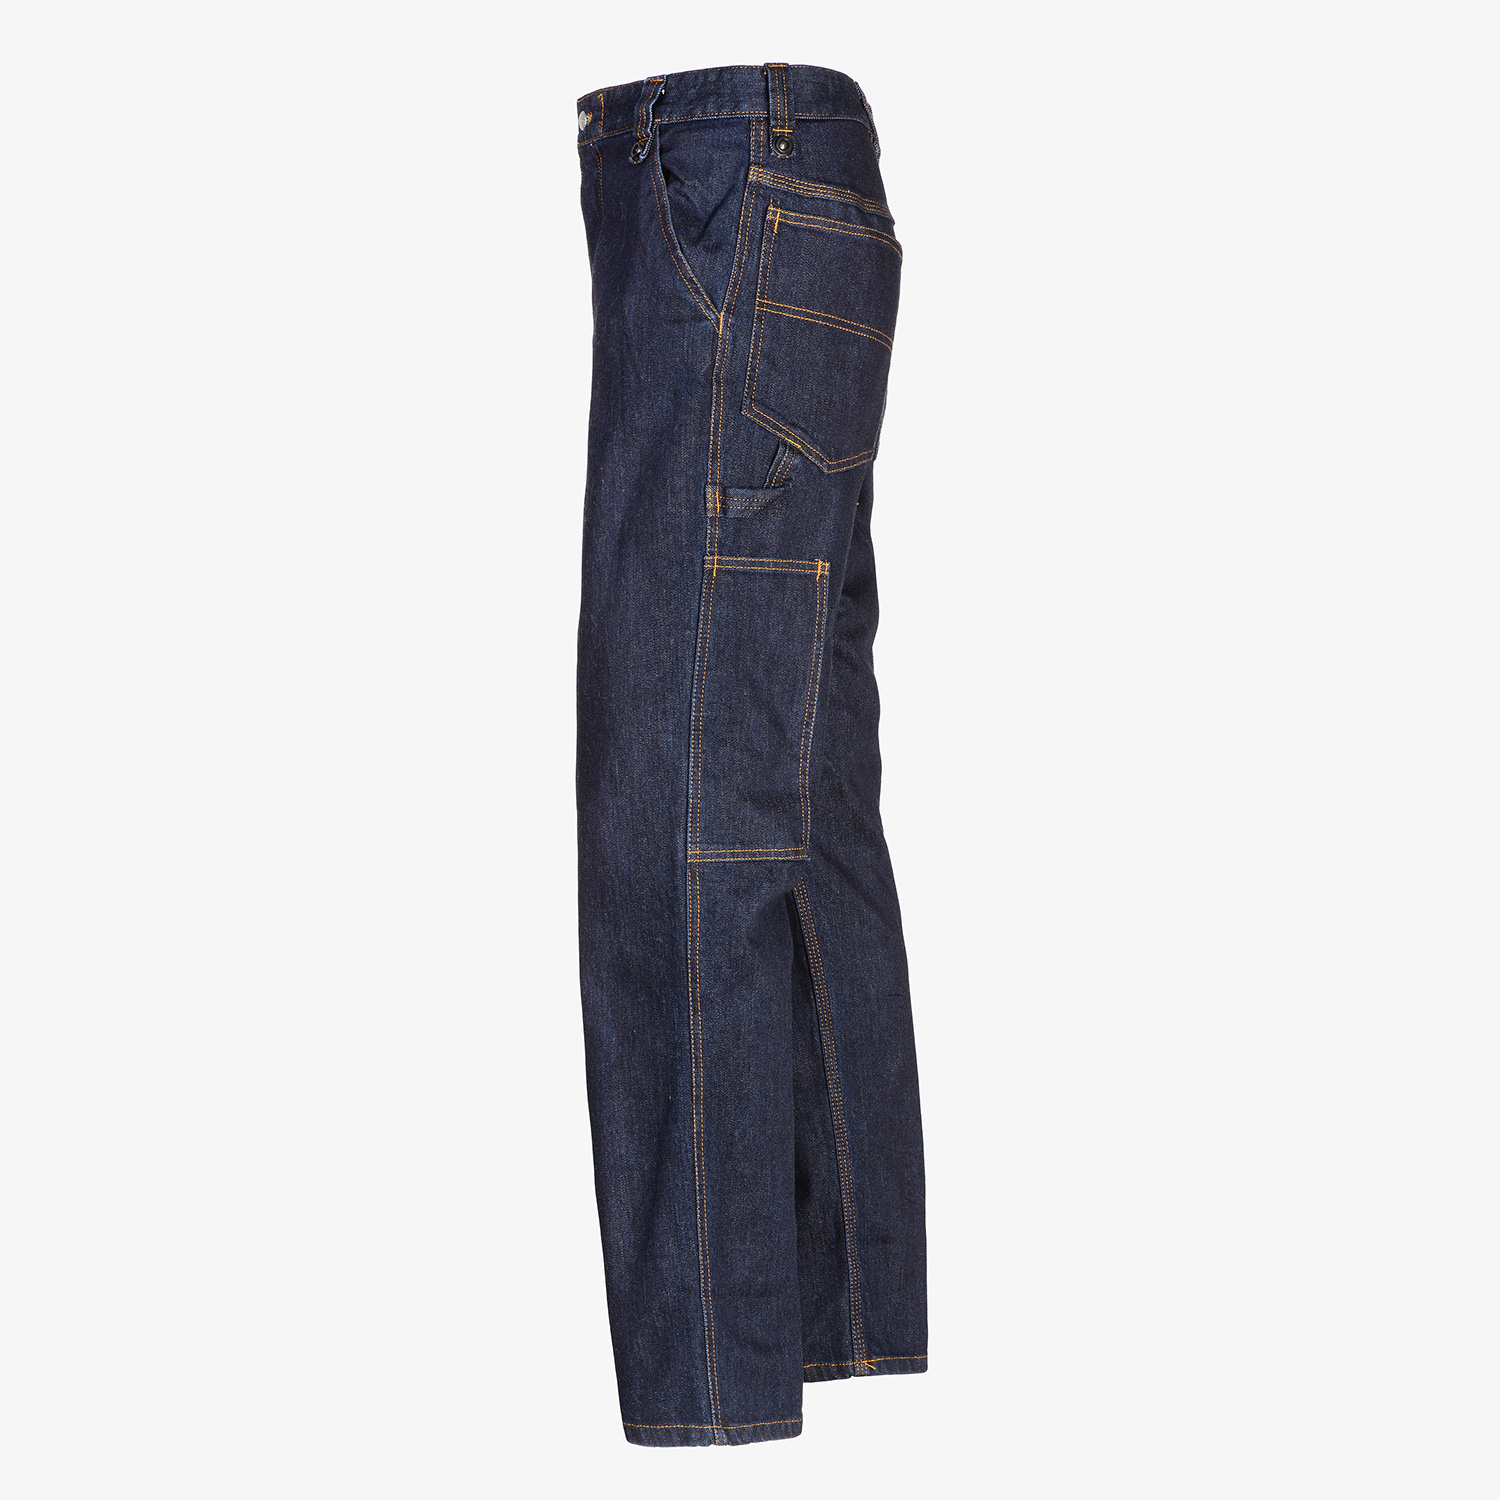 DUNGAREE Bundhose Jeans Stretch